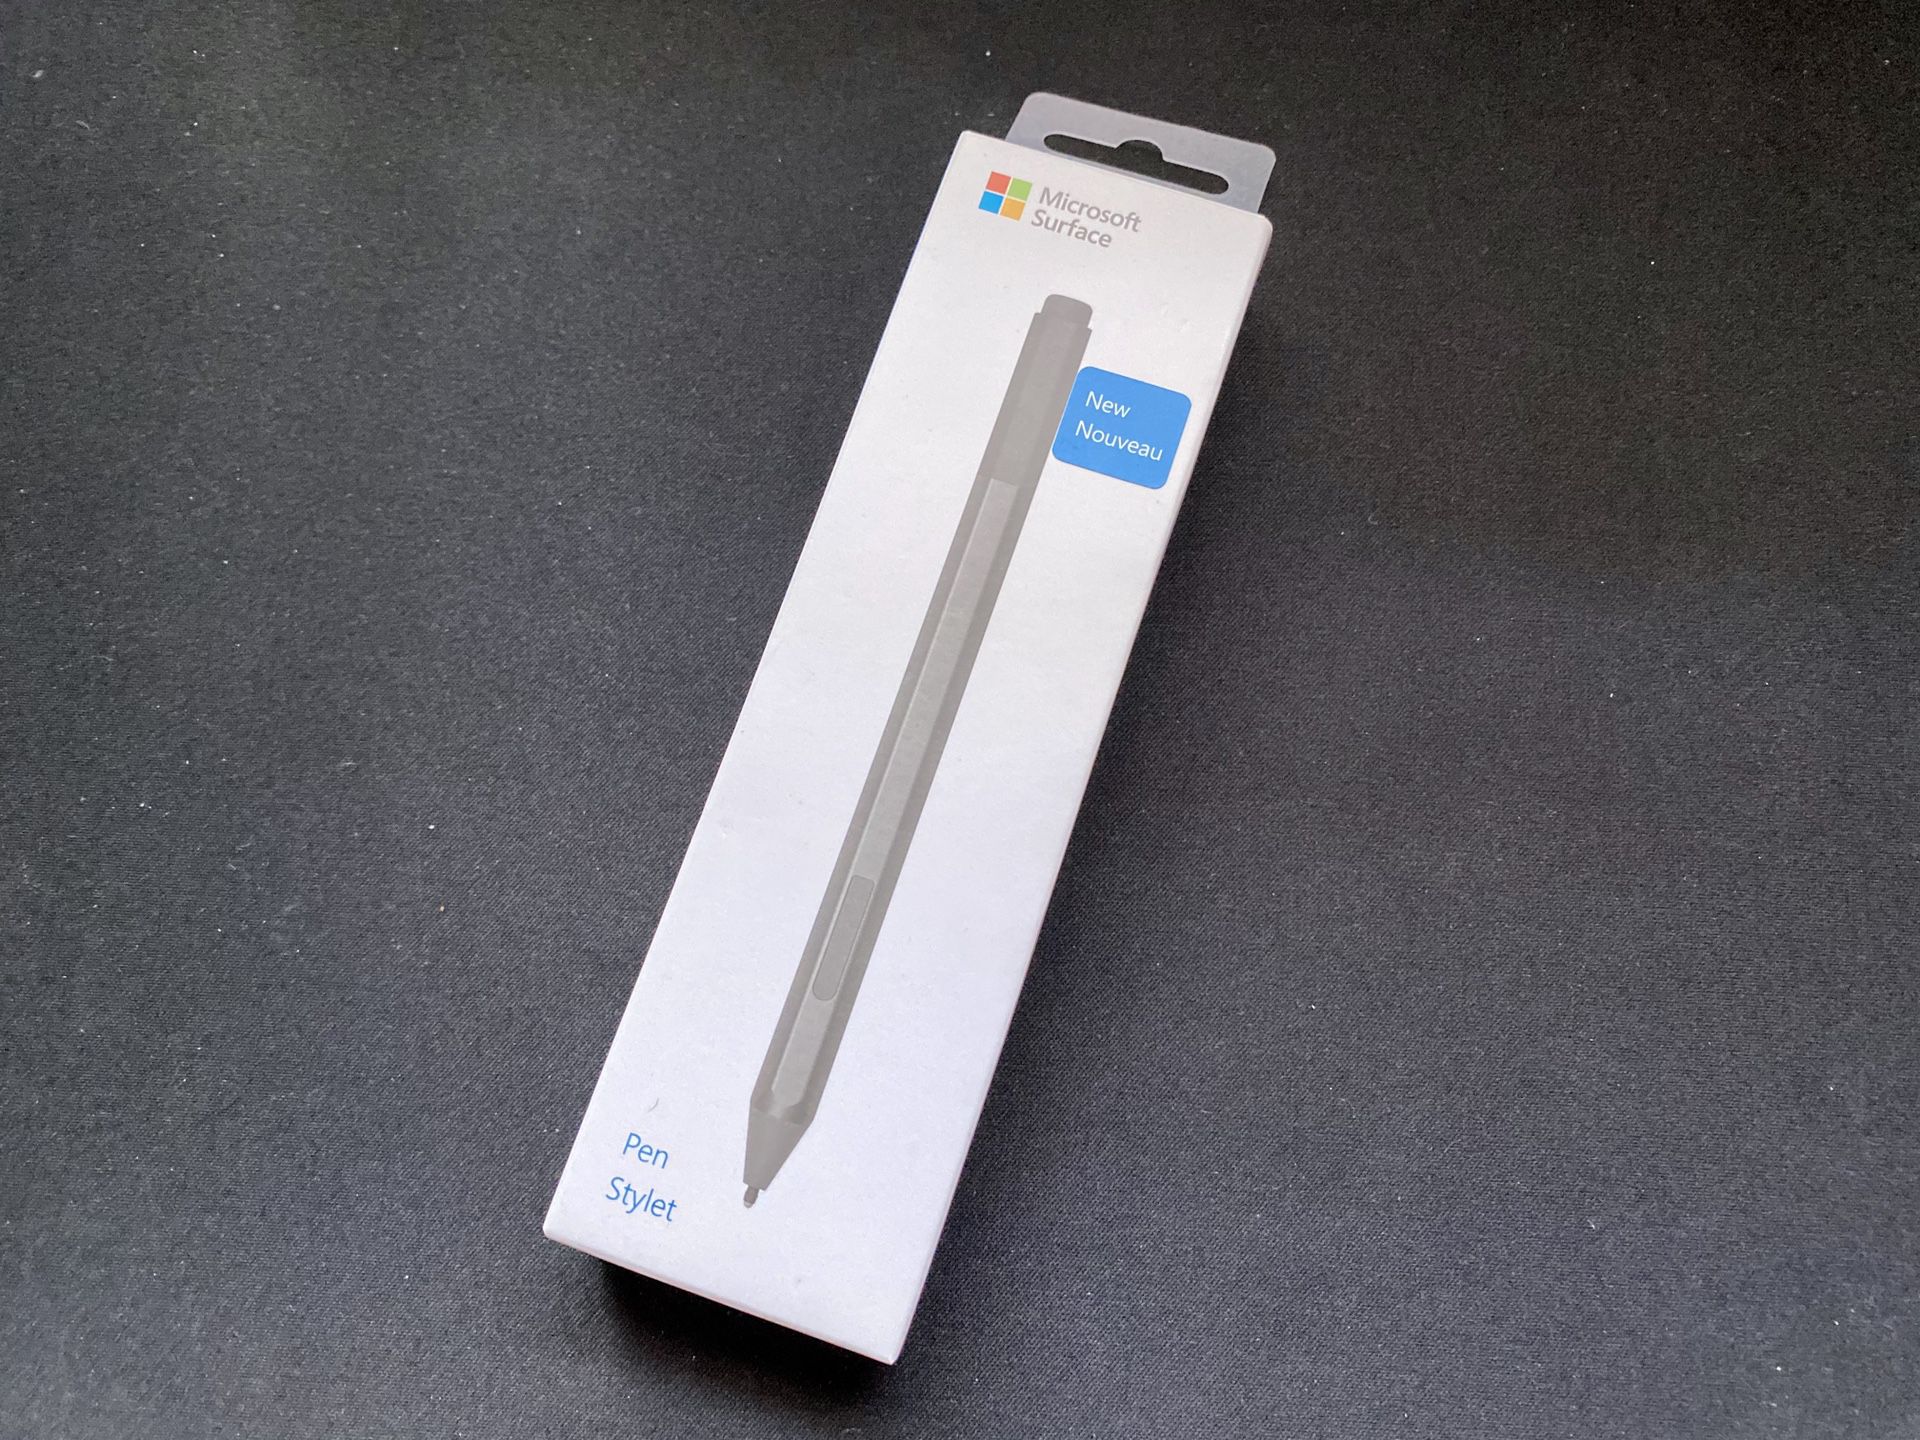 Microsoft Surface Pen - New